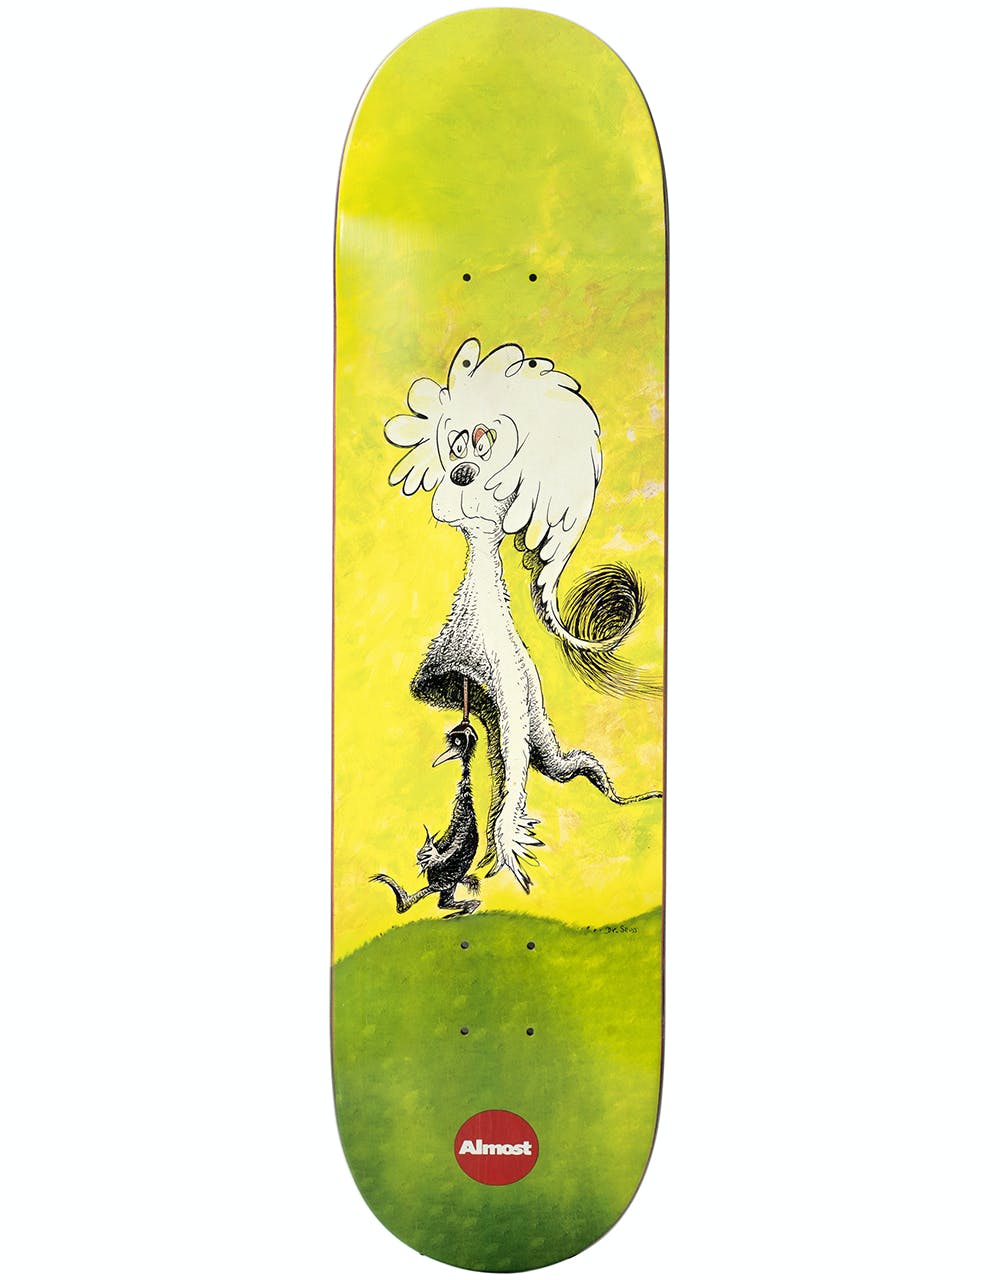 Almost x Dr. Seuss Geronzi Art Series R7 Skateboard Deck - 8.25"